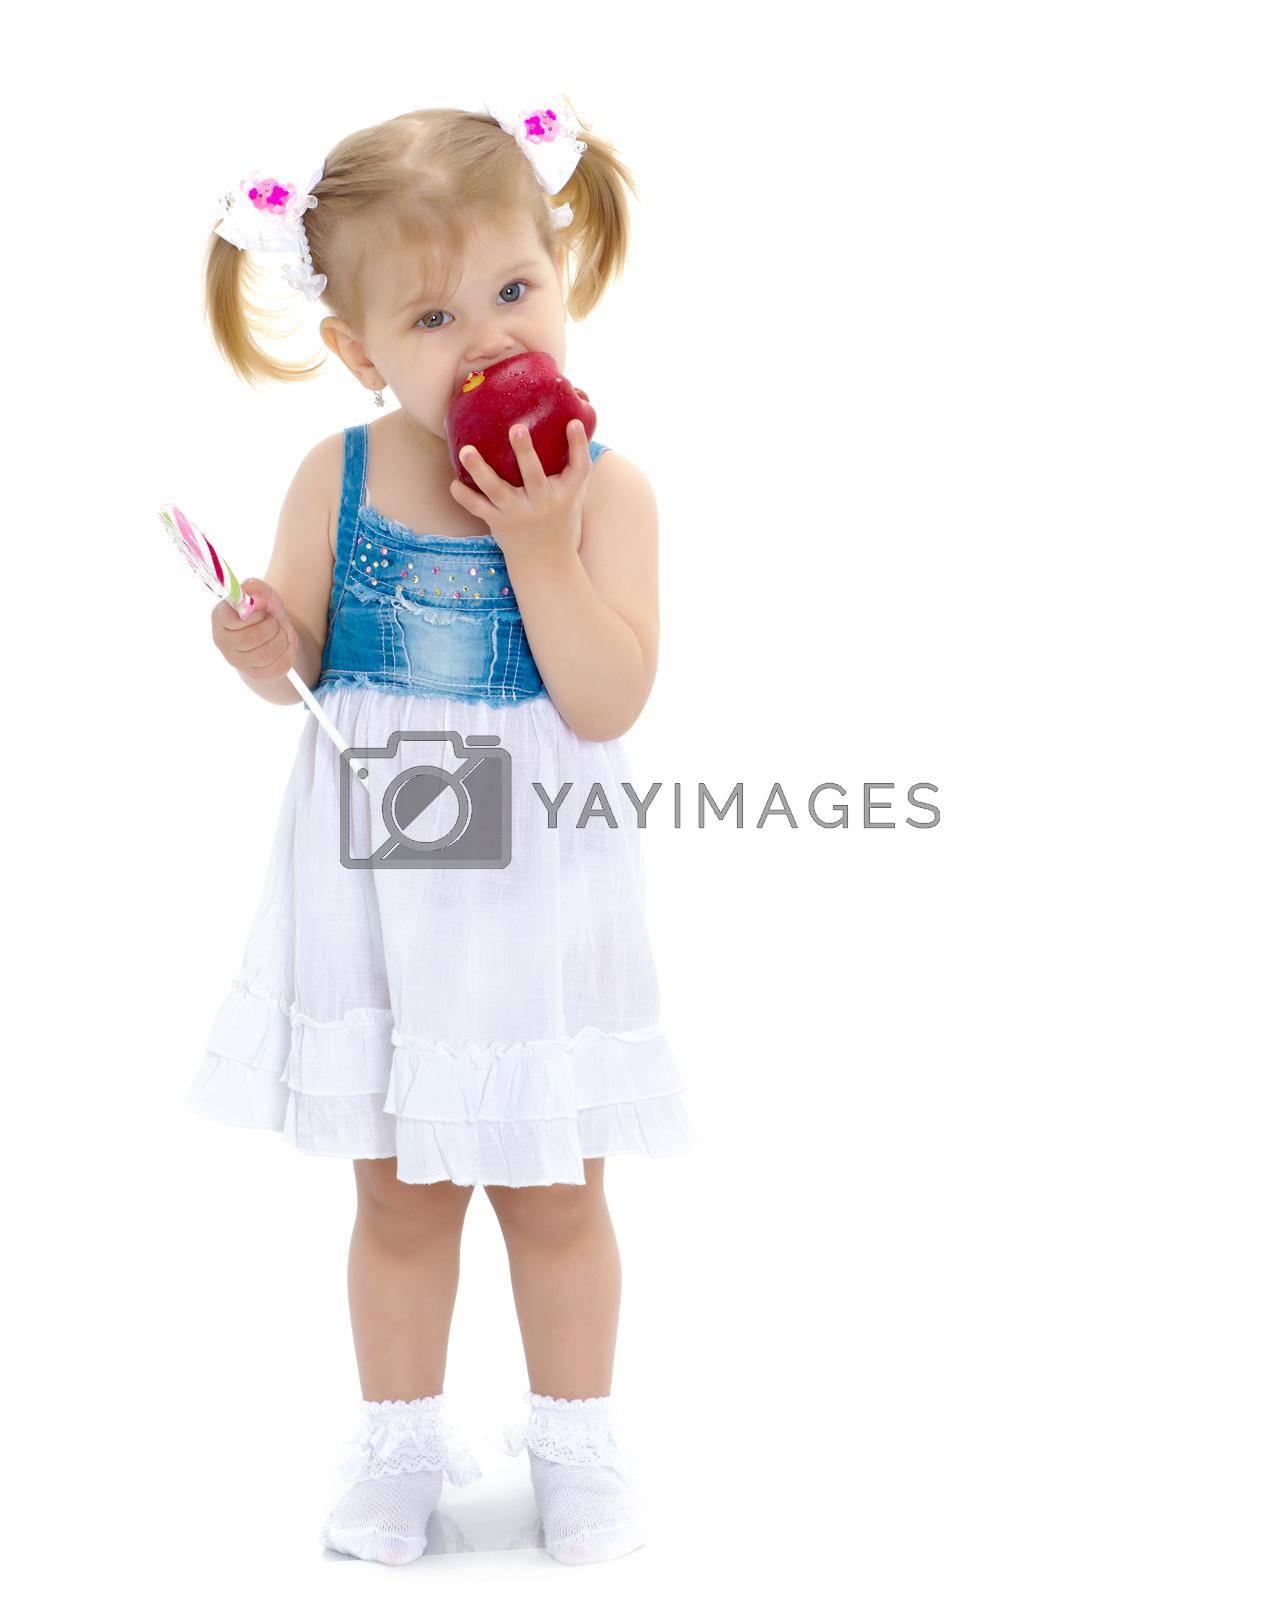 Royalty free image of Little girl with apple by kolesnikov_studio